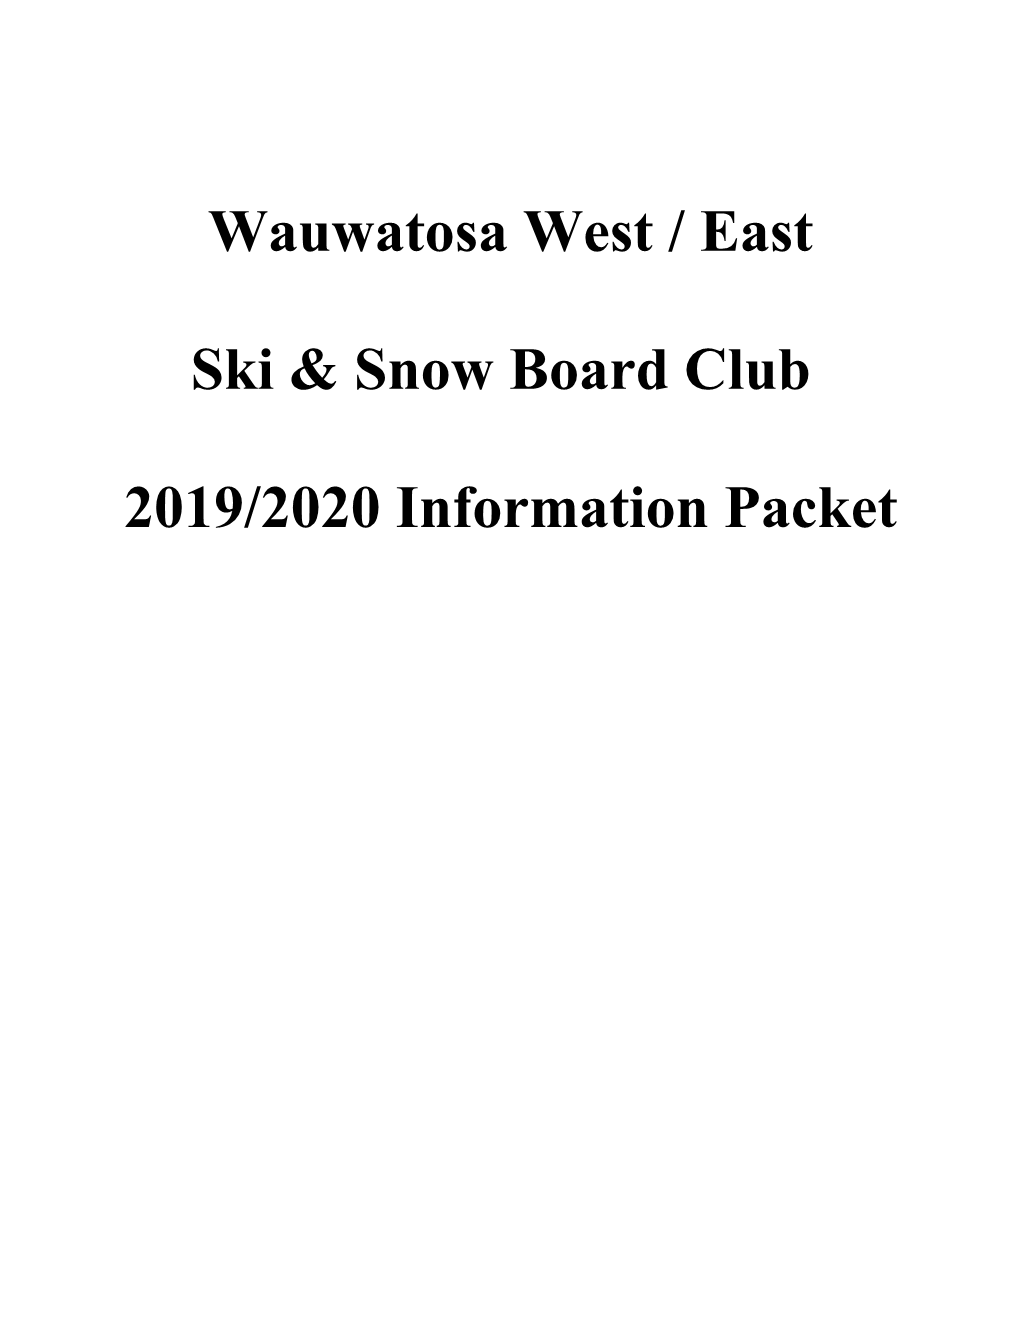 Wauwatosa West / East Ski & Snow Board Club 2019/2020 Information